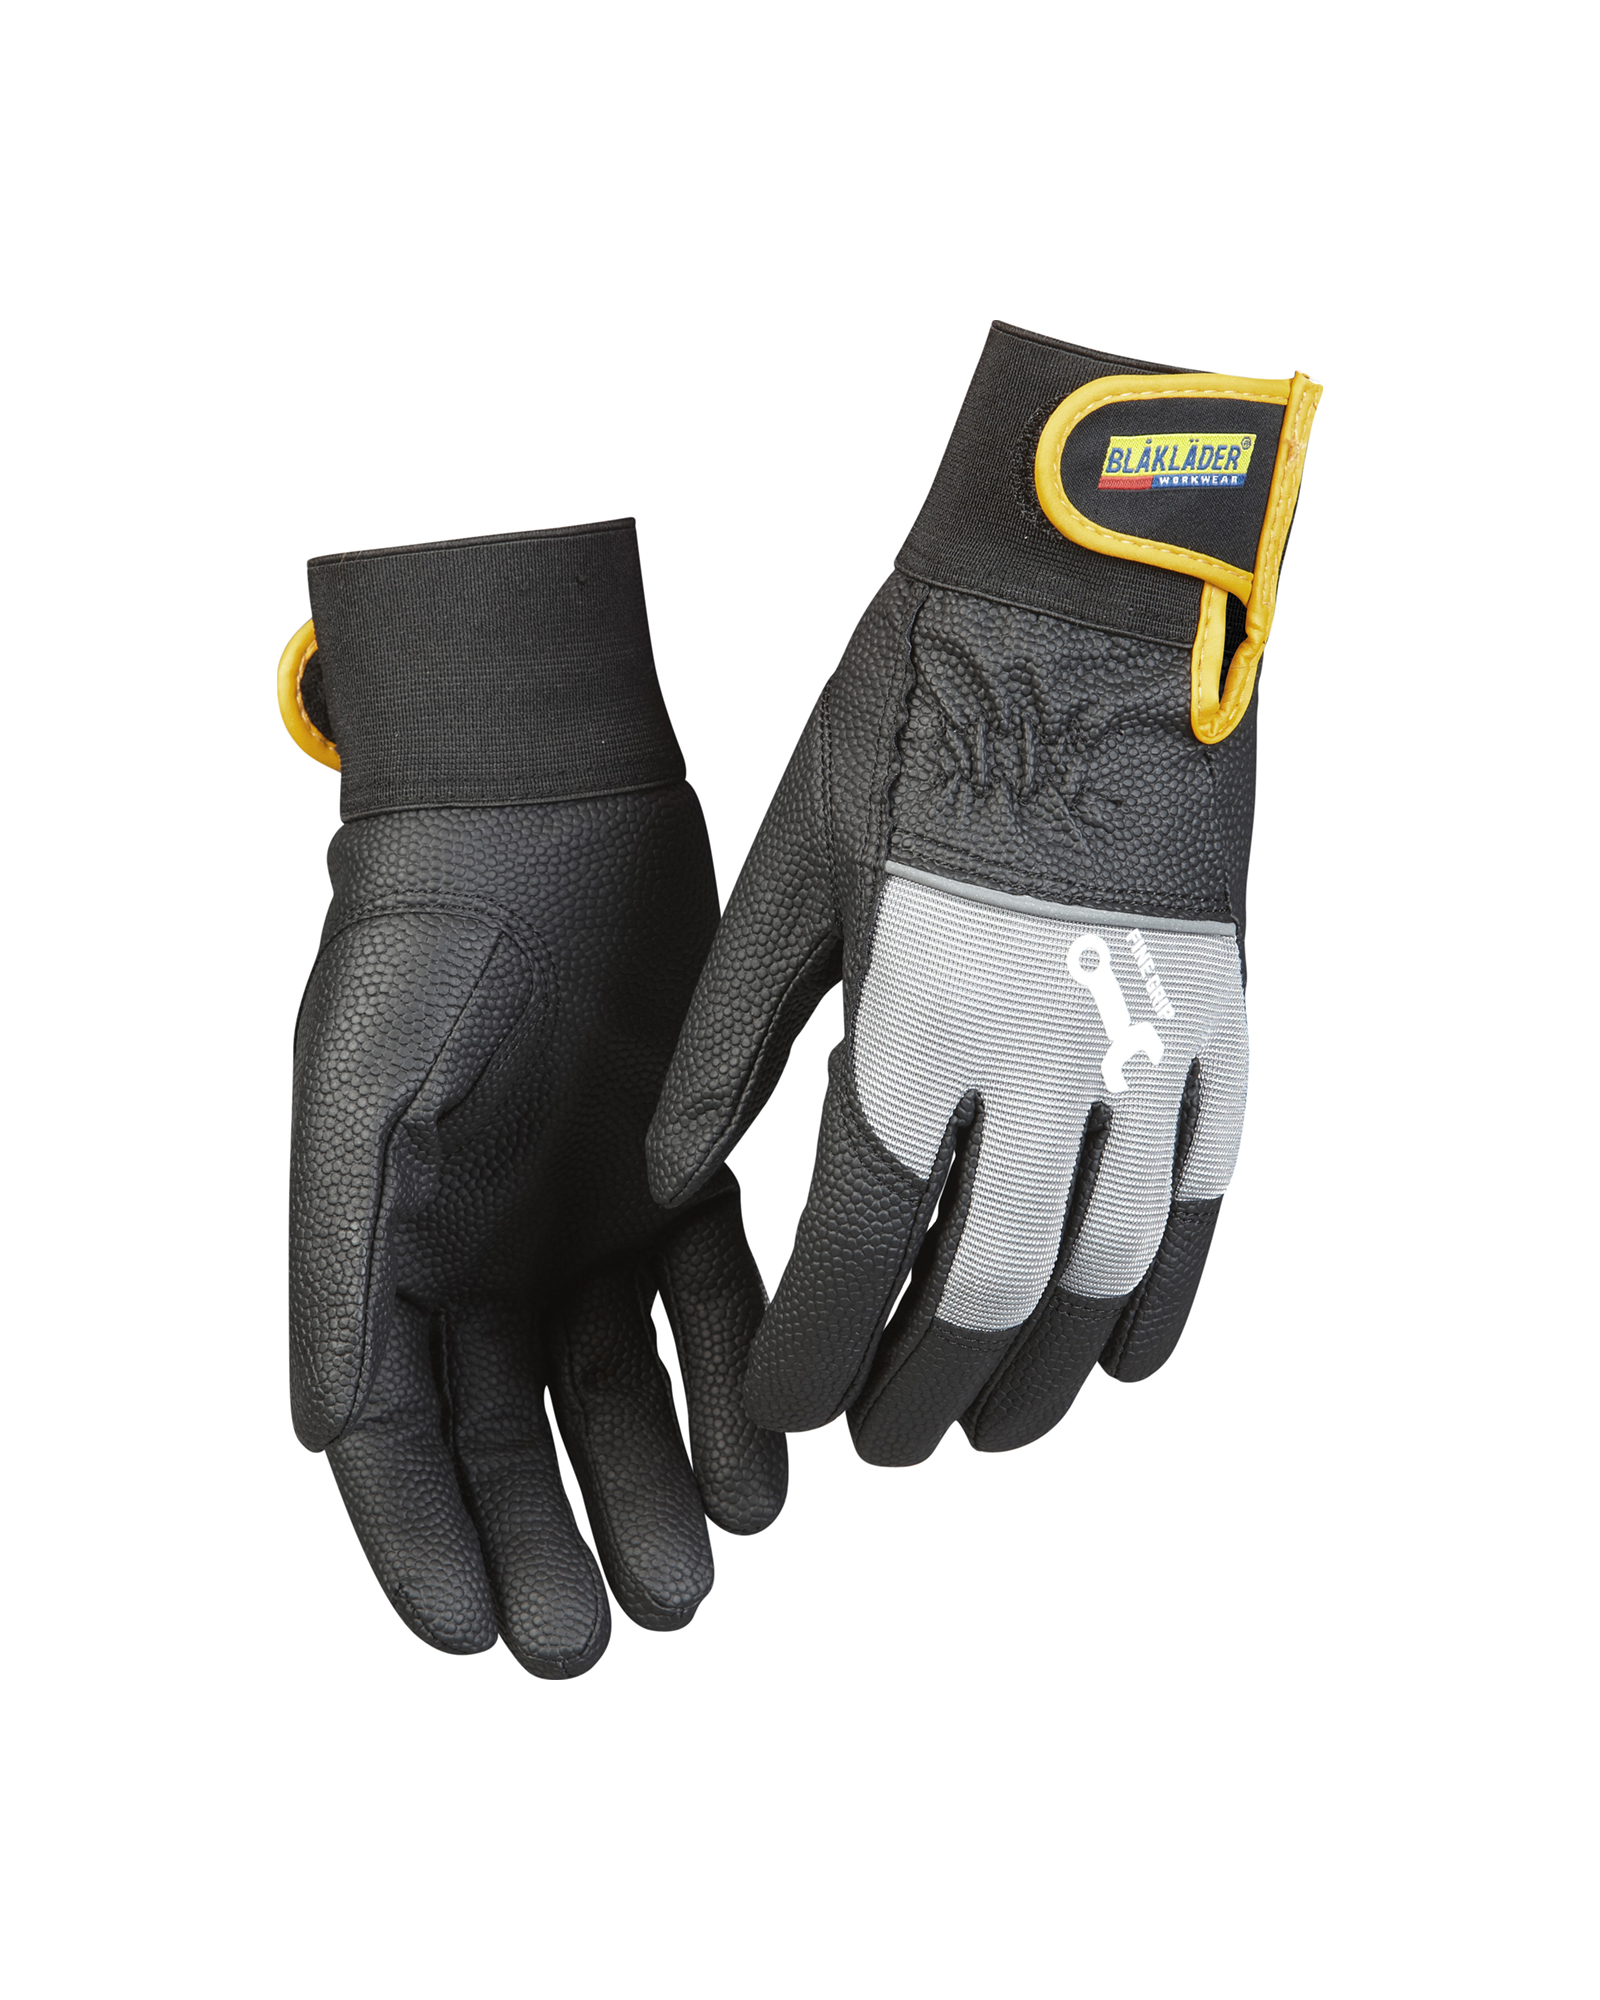 Blakläder Winterhandschuh Paar Handwerk schwarz gelb Arbeitshandschuh Handschuh 